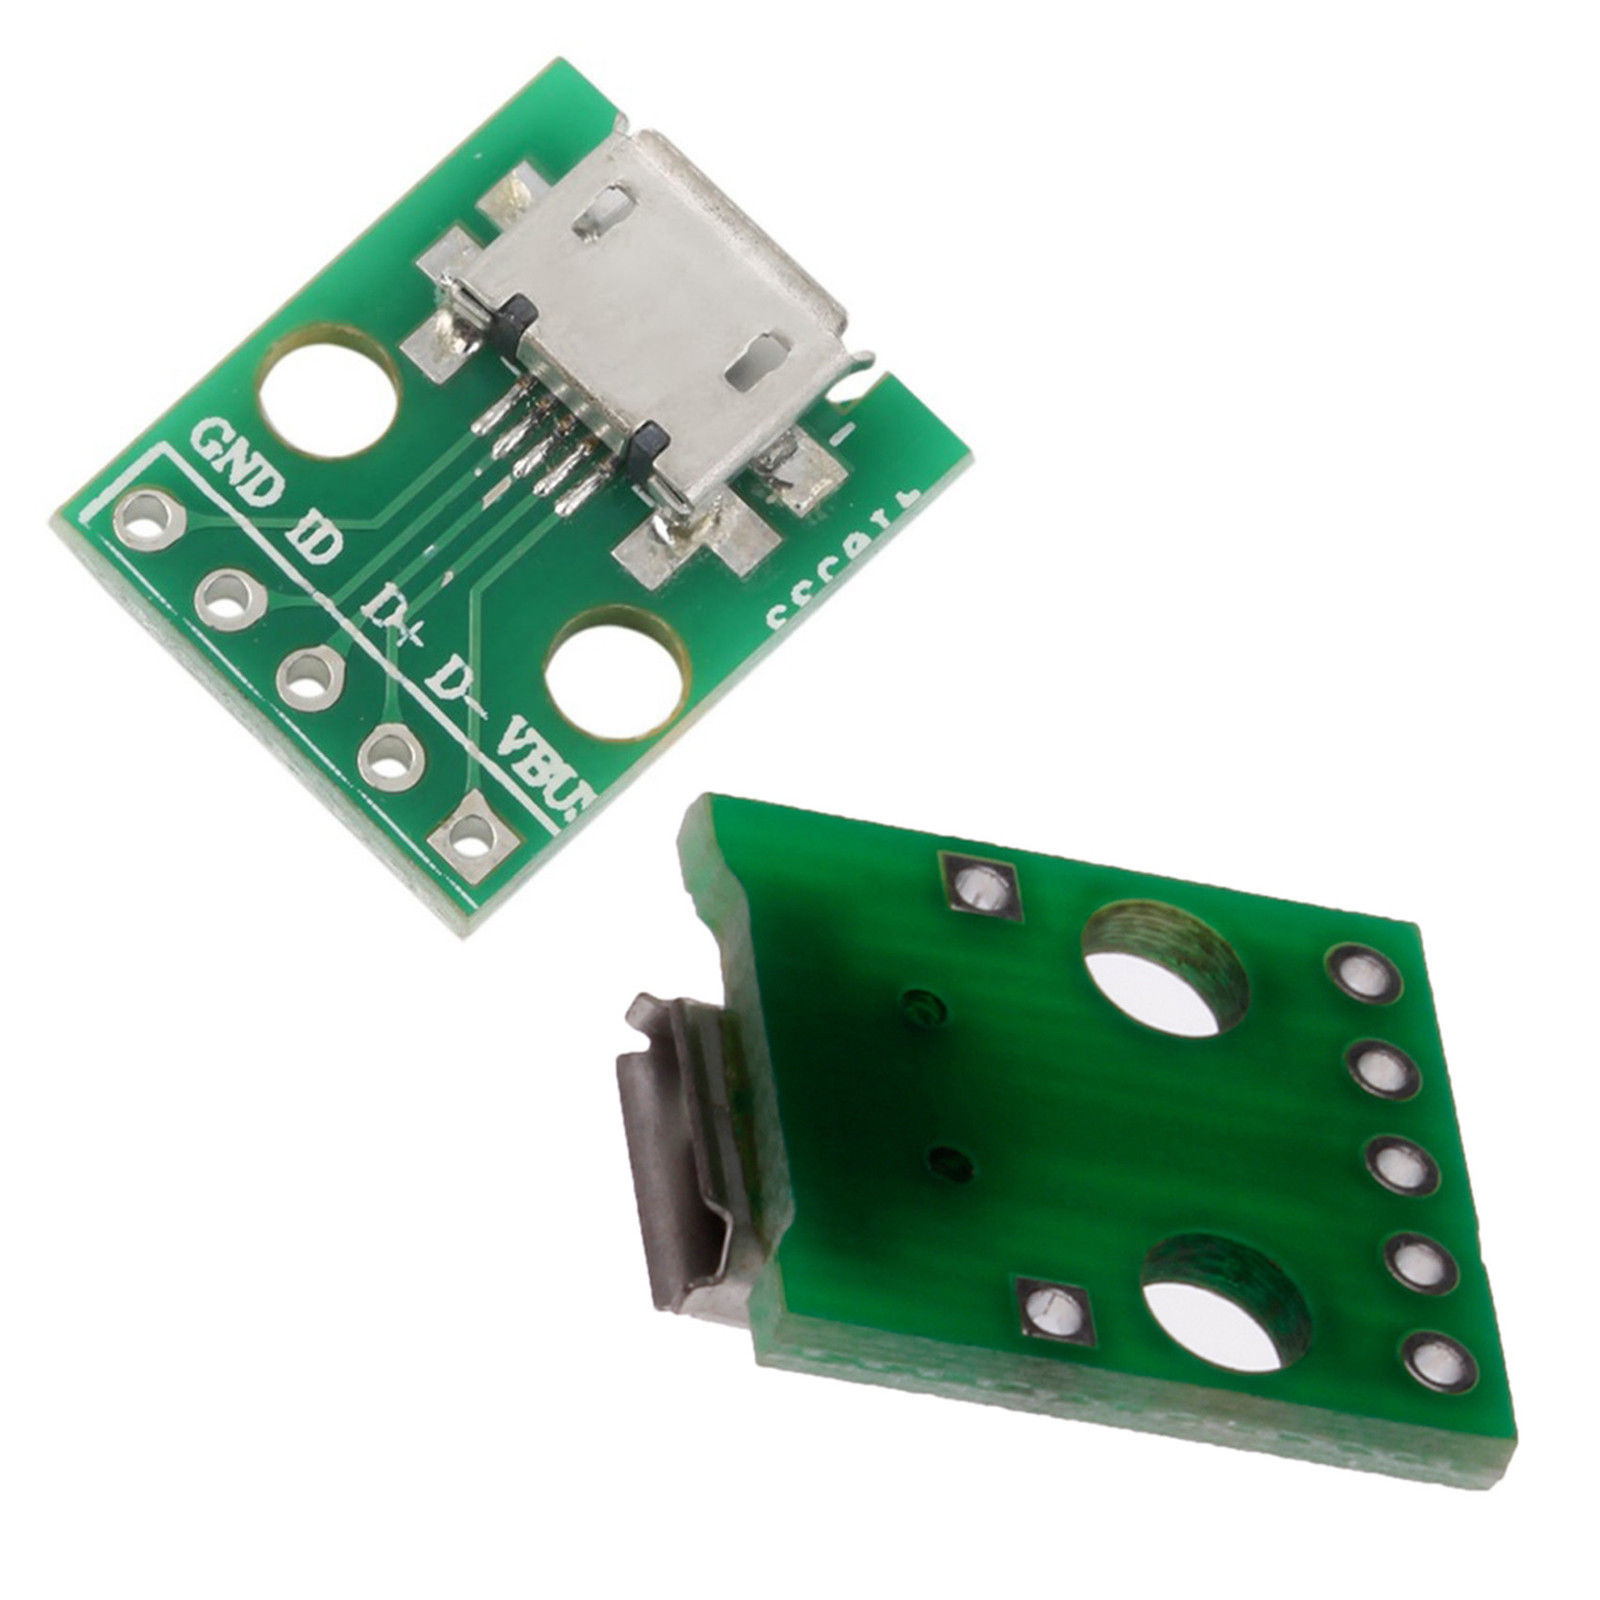 5Pcs Female Micro USB to DIP Adapter Converter 2.54mm PCB Breakout Board JB